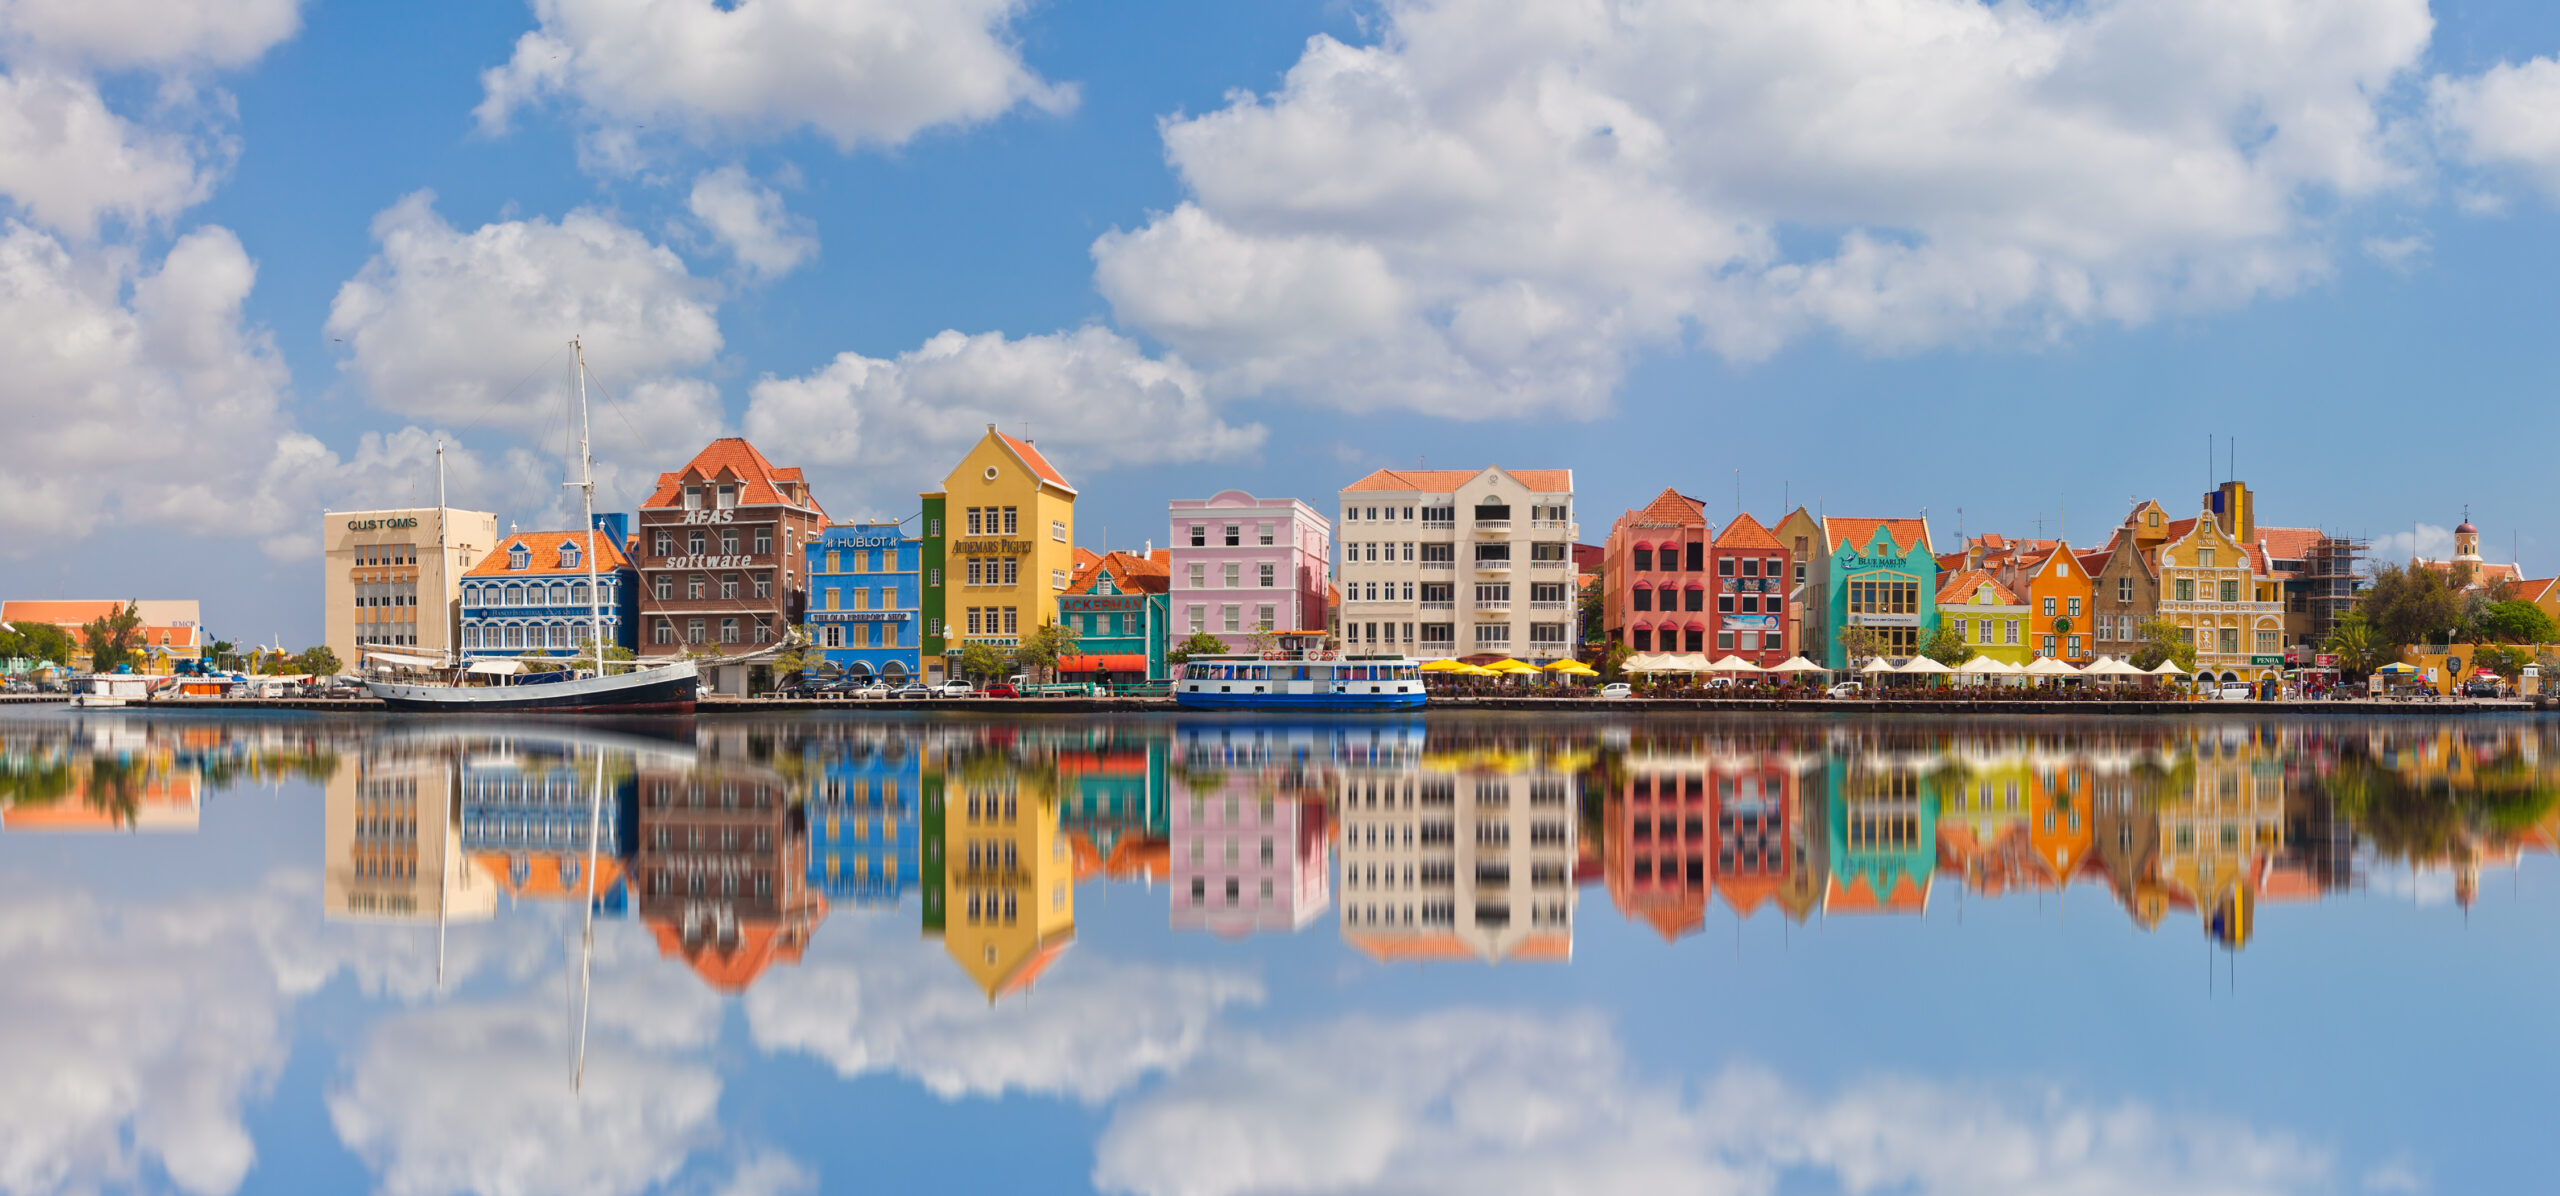 Willemstad, Curaçao (Photo Credit: Carlos Yudica / Shutterstock)